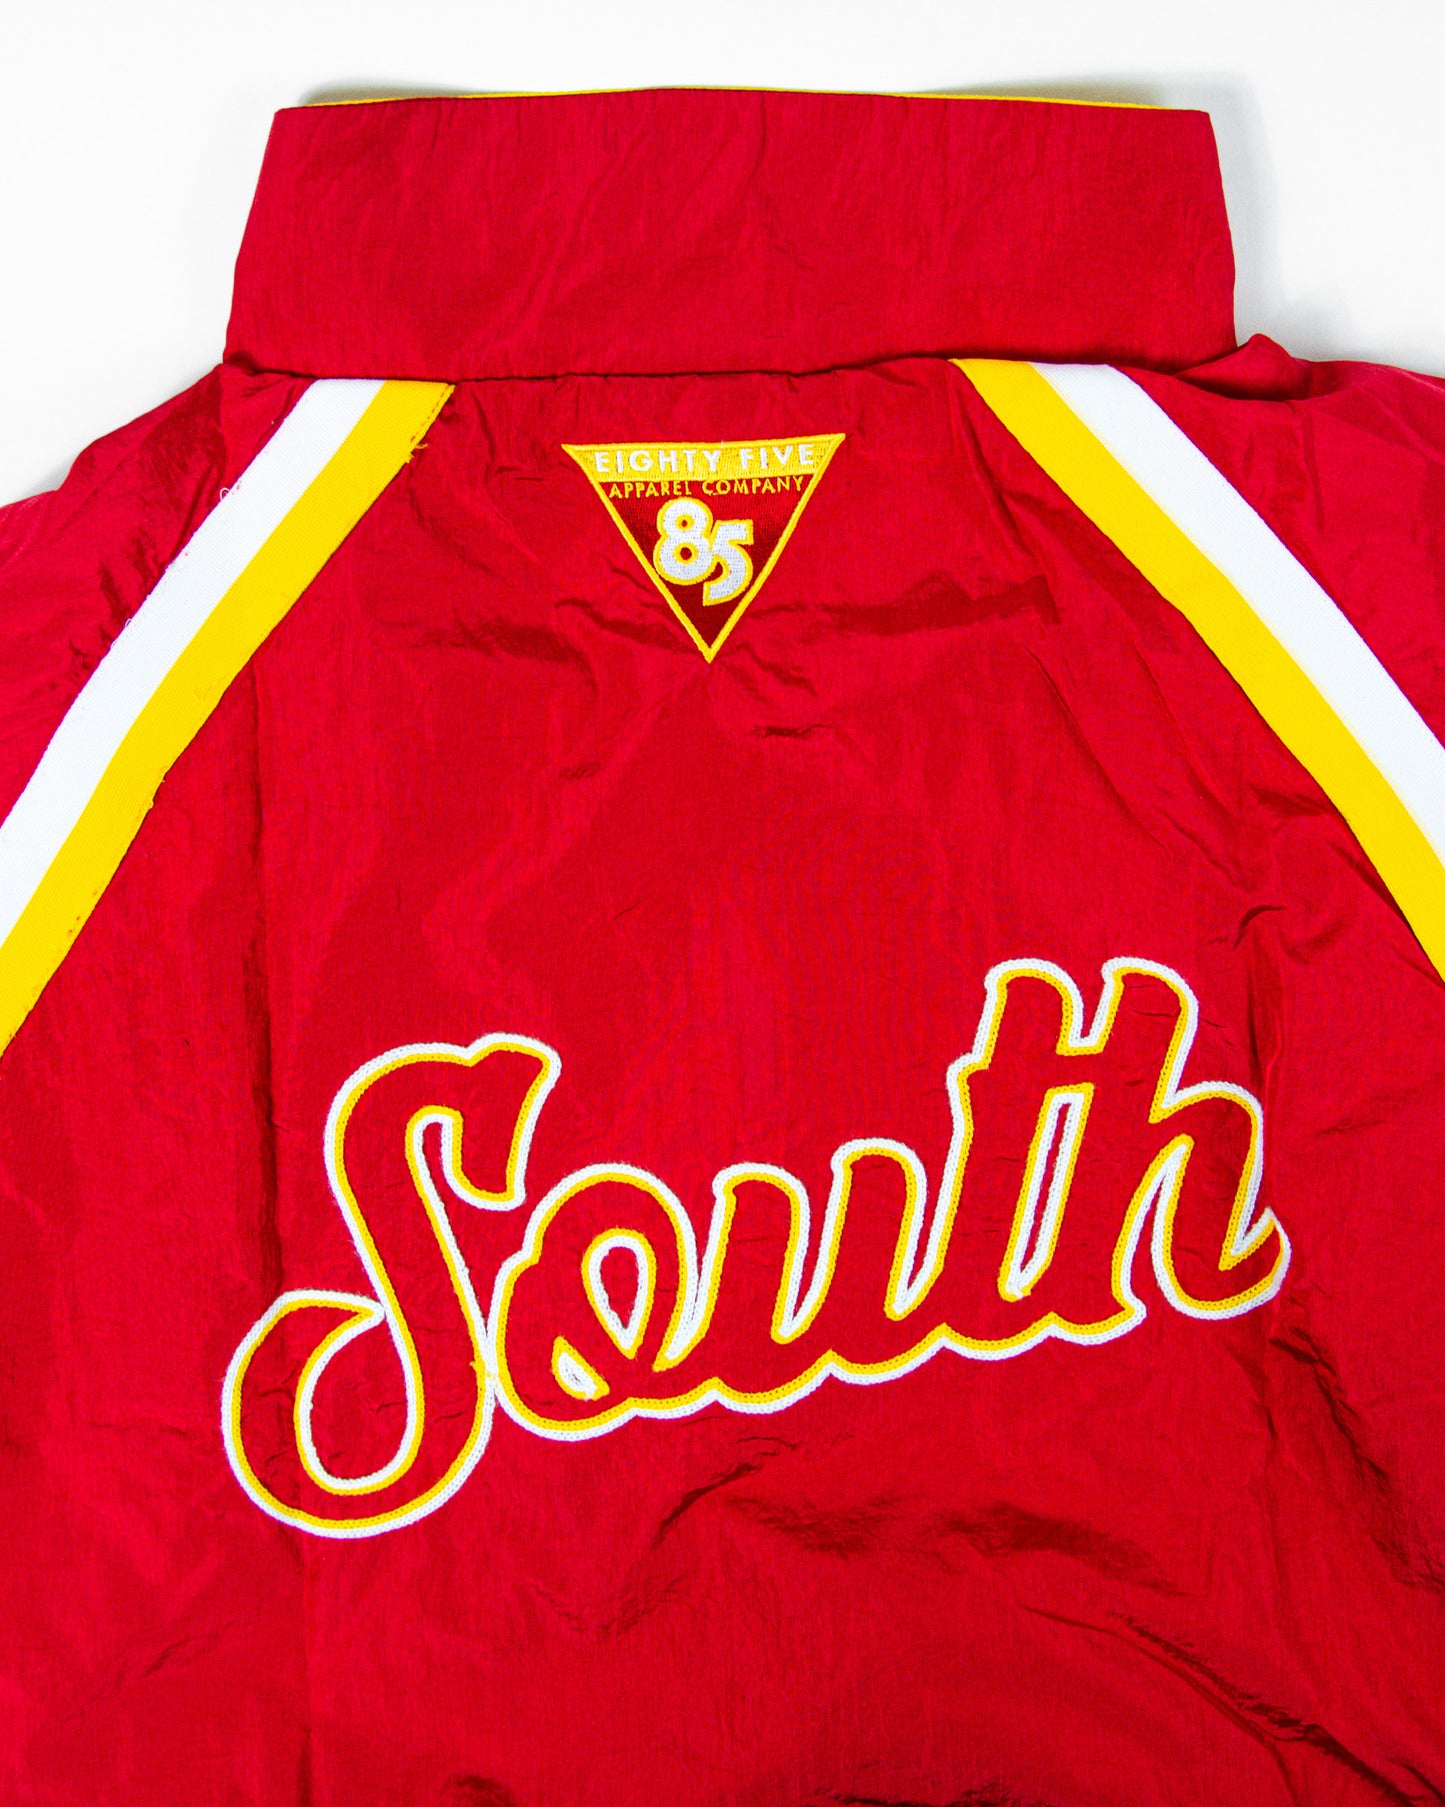 South Script Swishy Jacket - Red